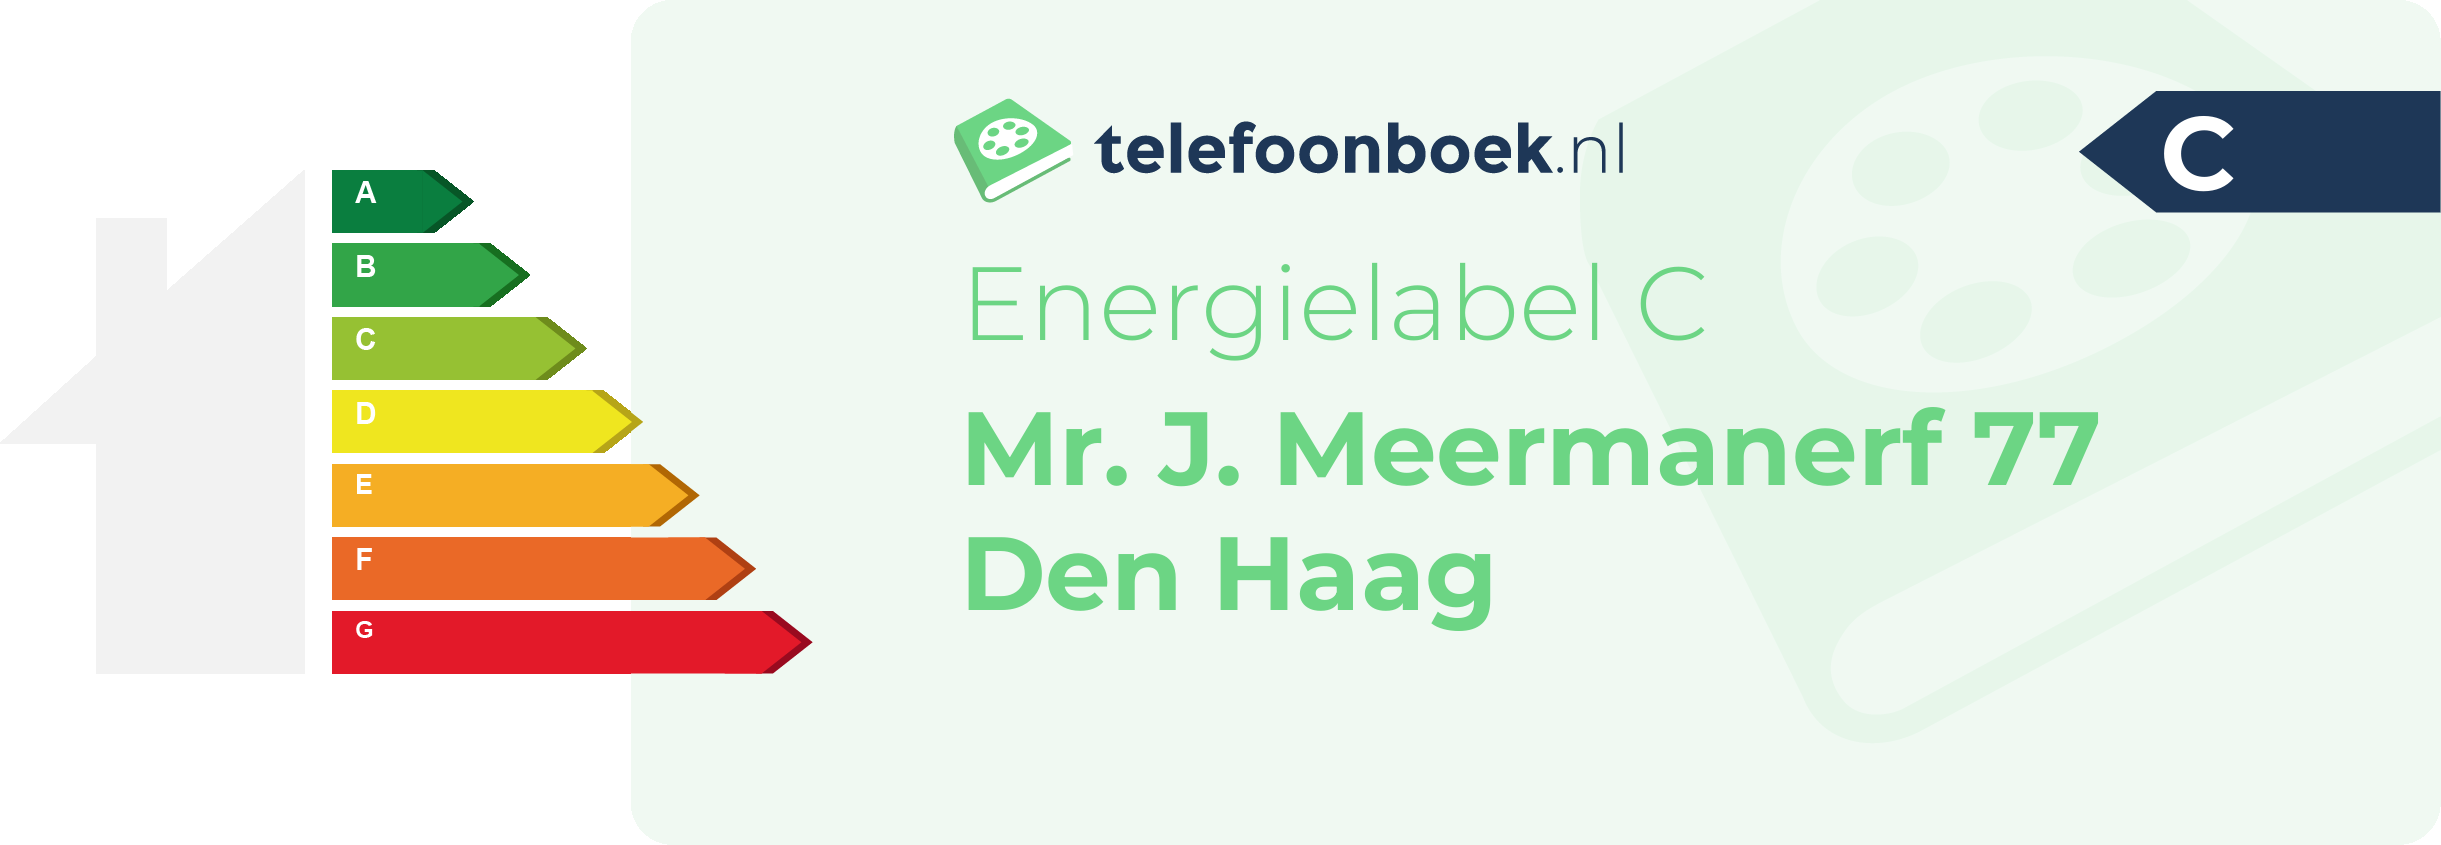 Energielabel Mr. J. Meermanerf 77 Den Haag